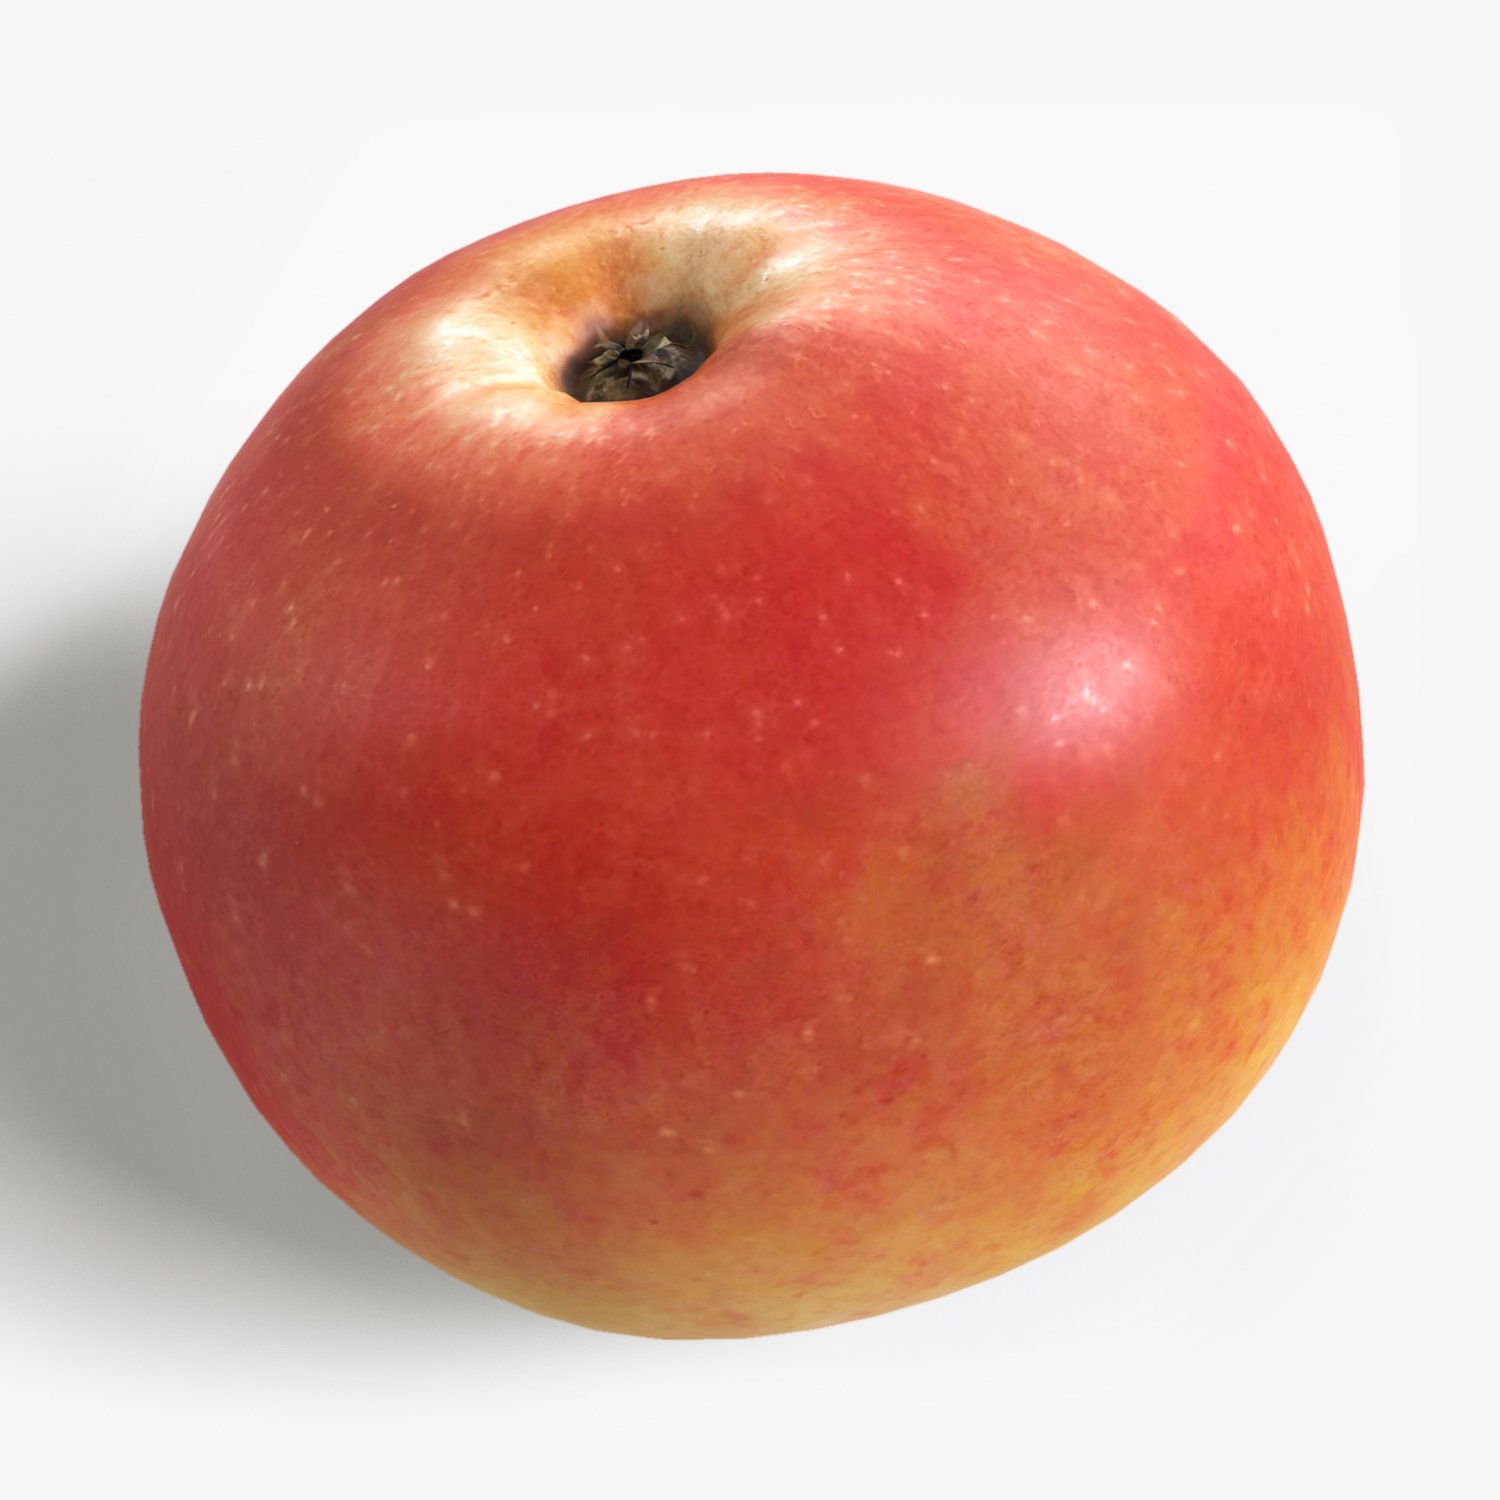 Apple 3d model